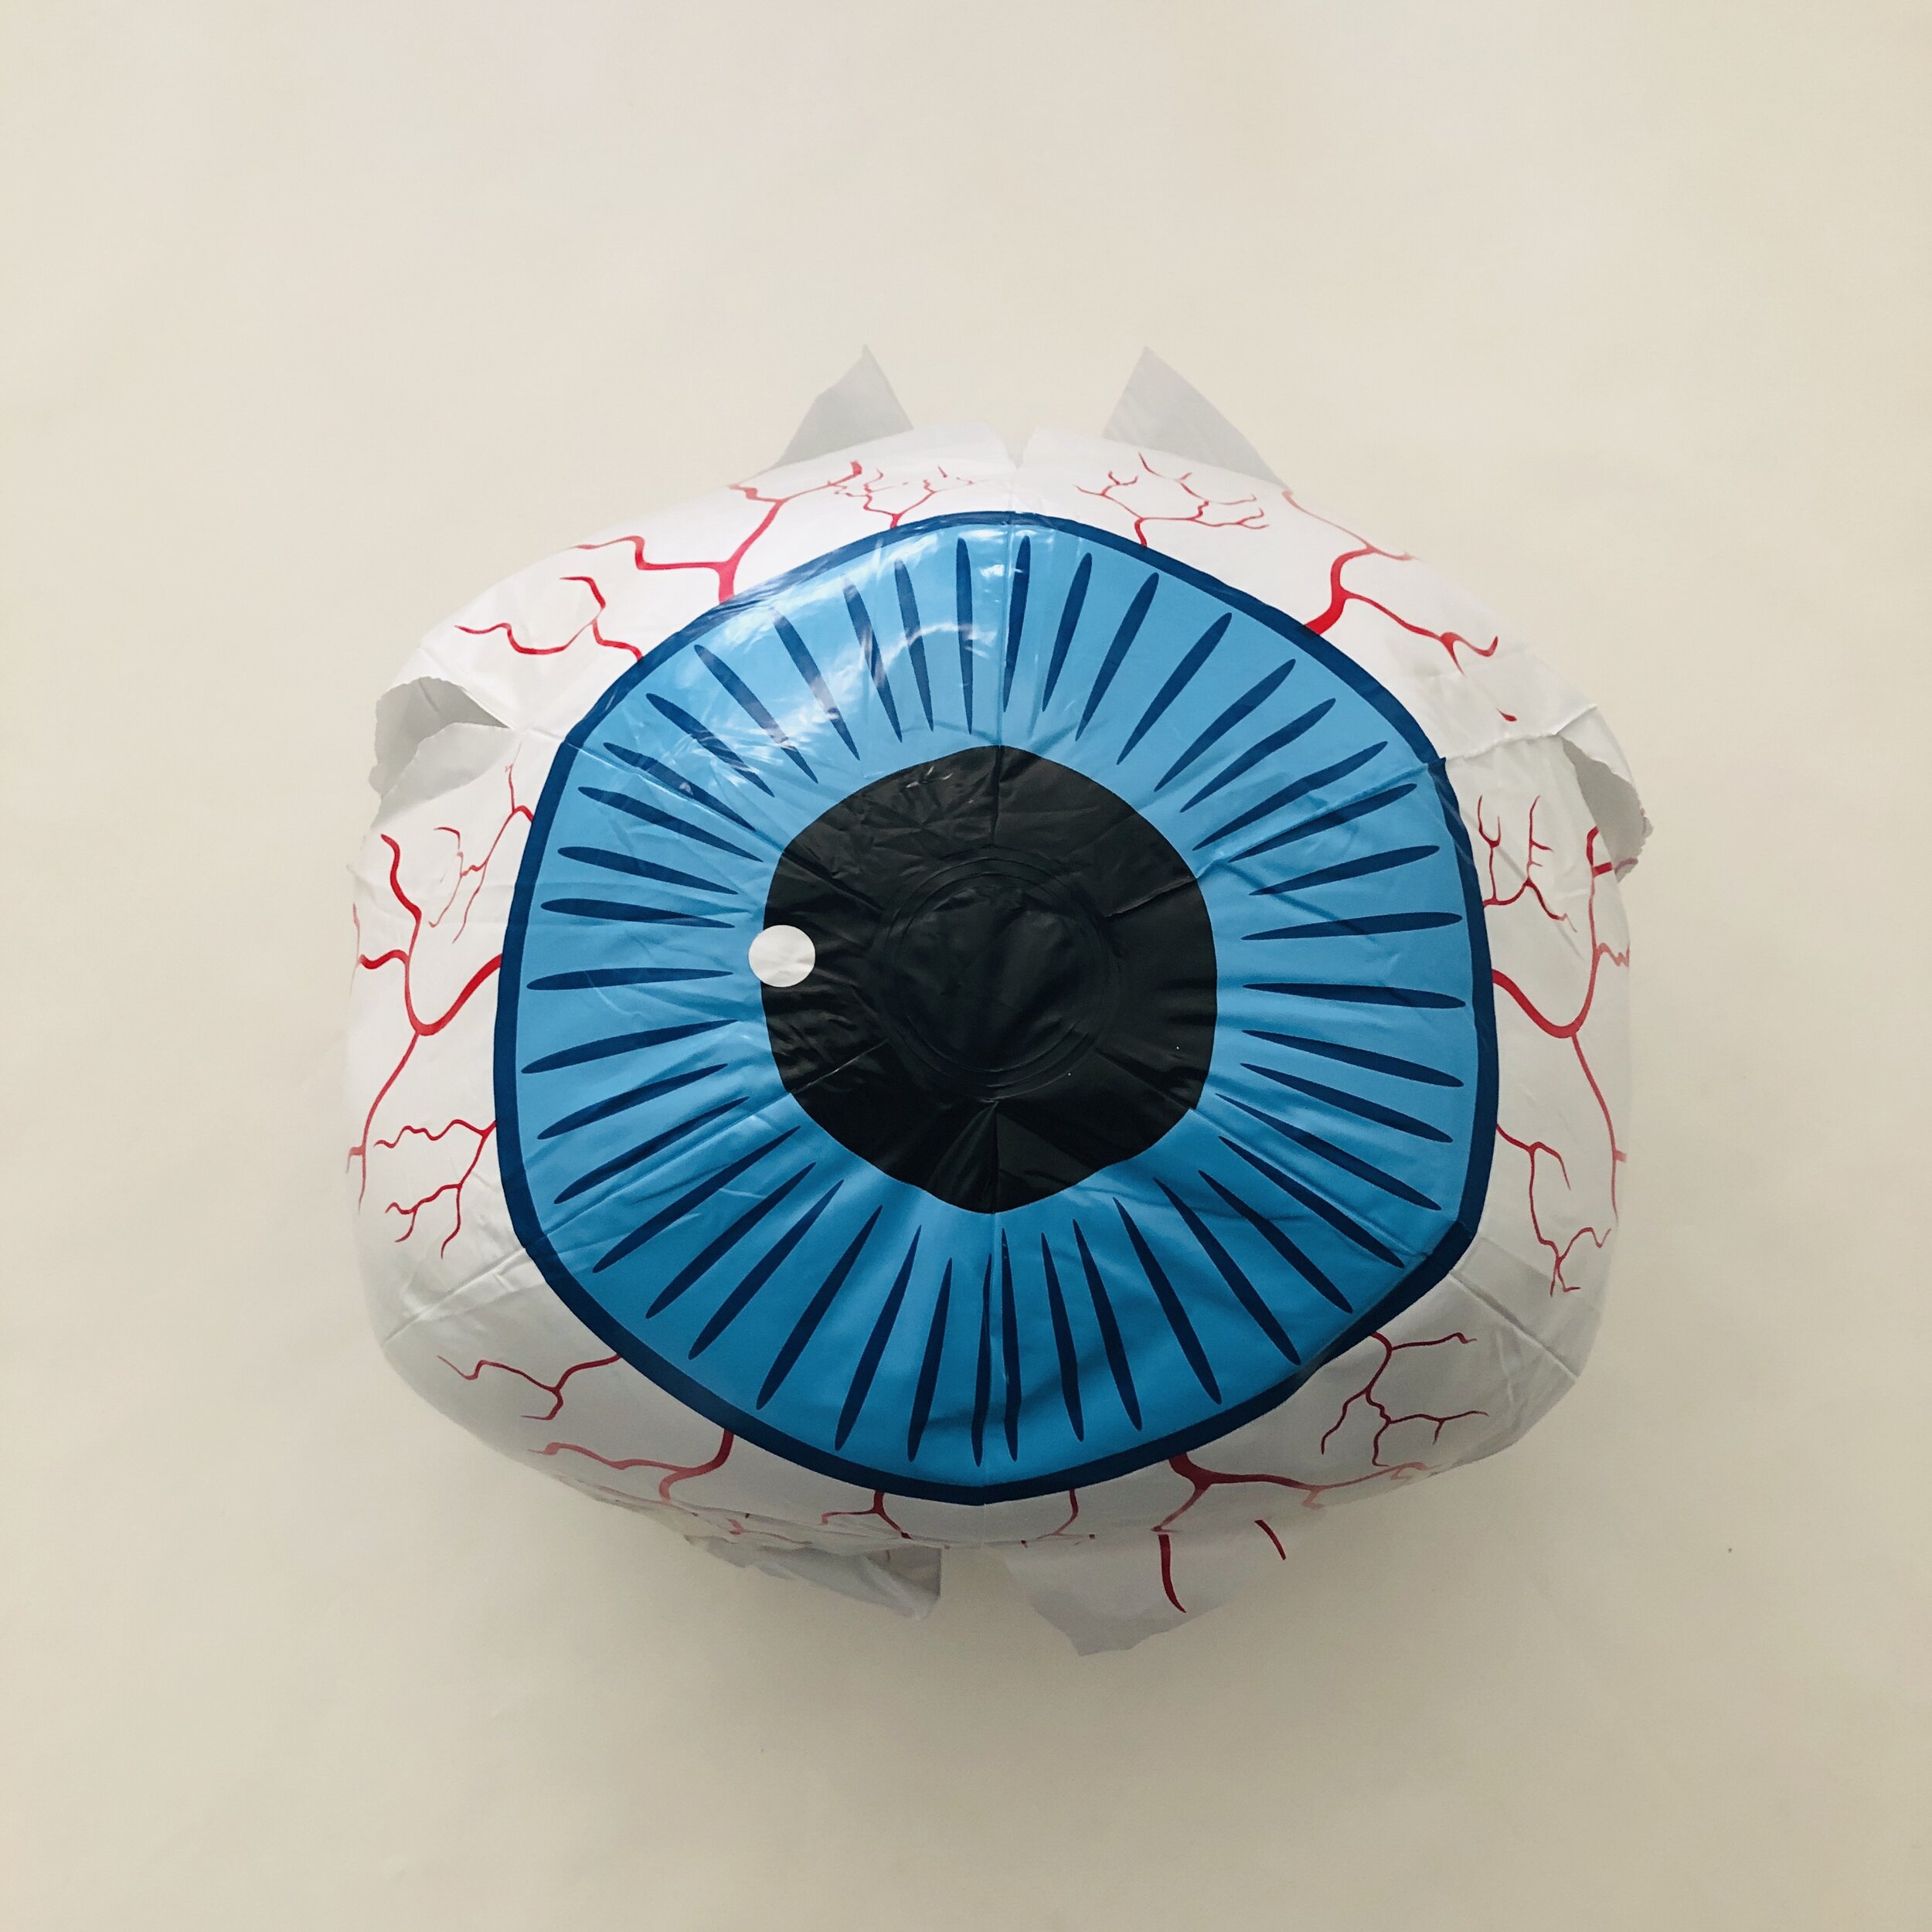 How to Make an Eyeball Costume